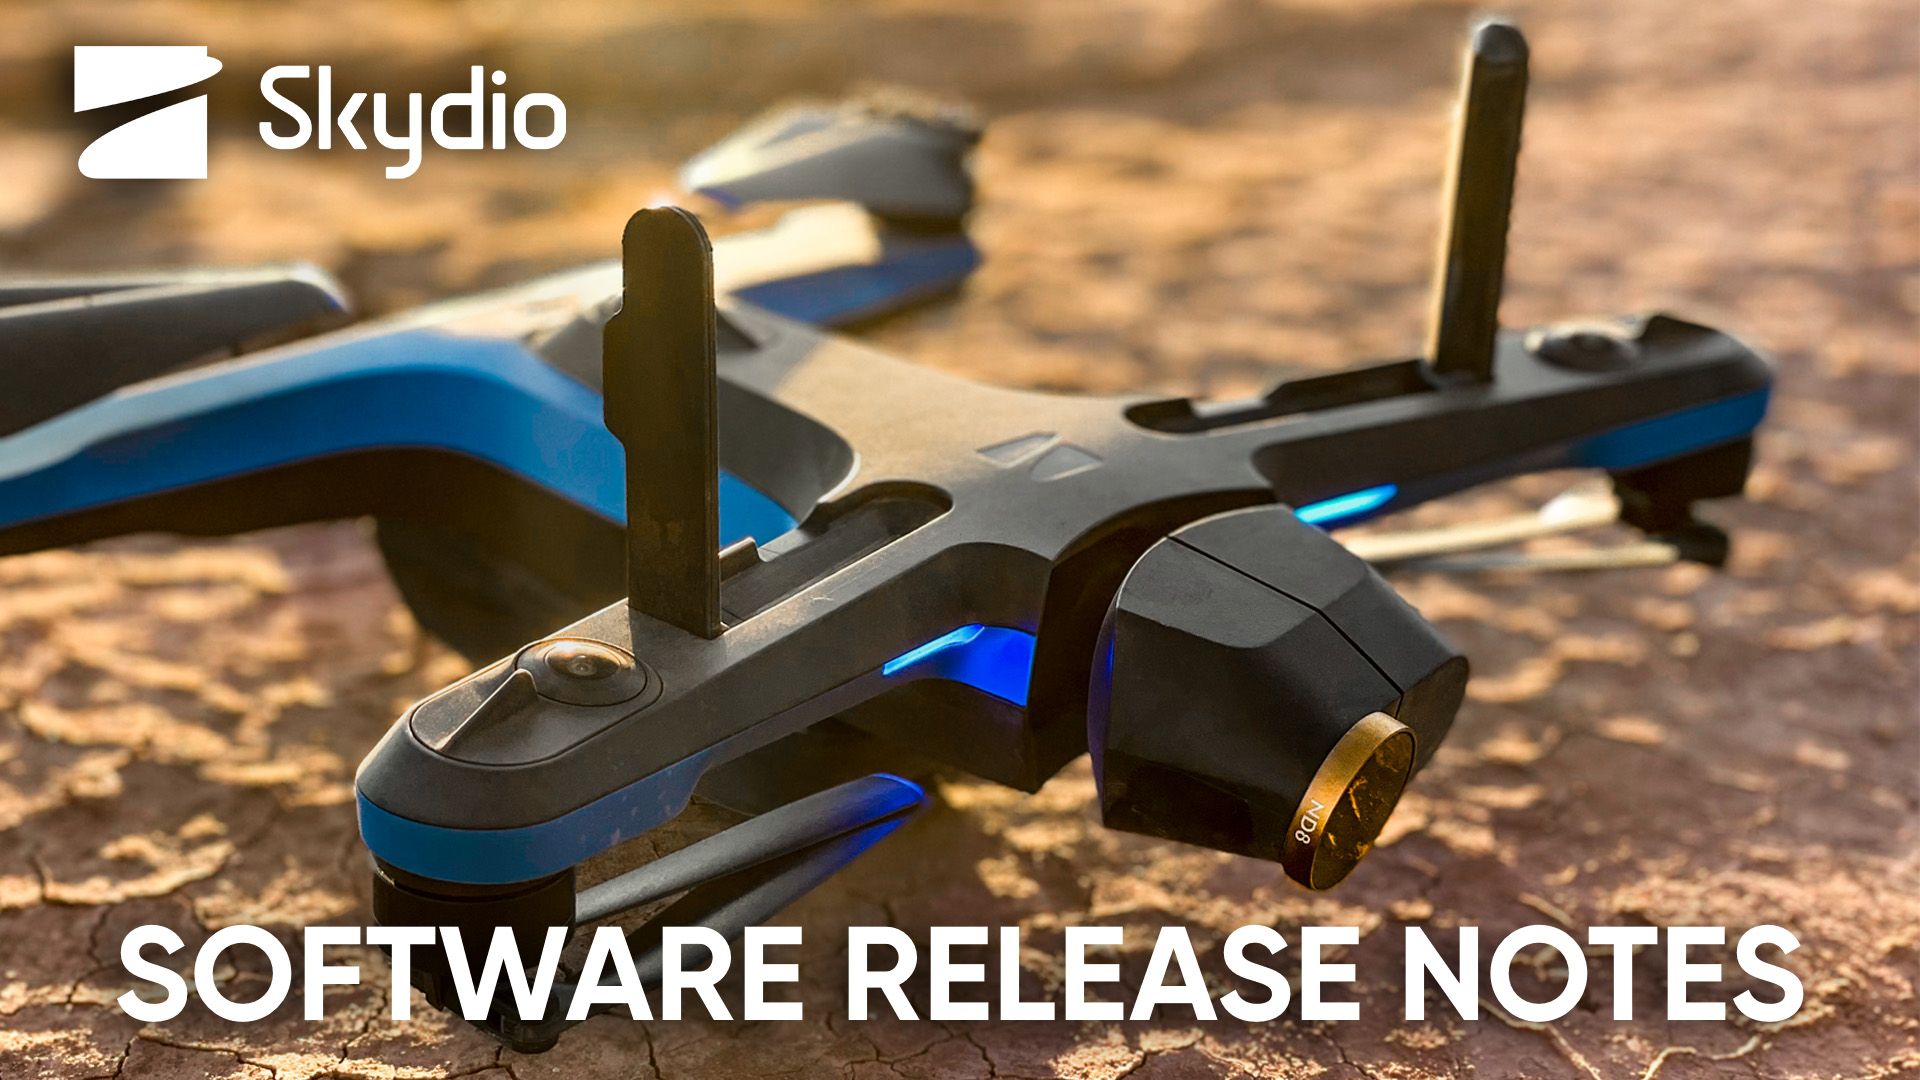 Skydio 2 Software Update